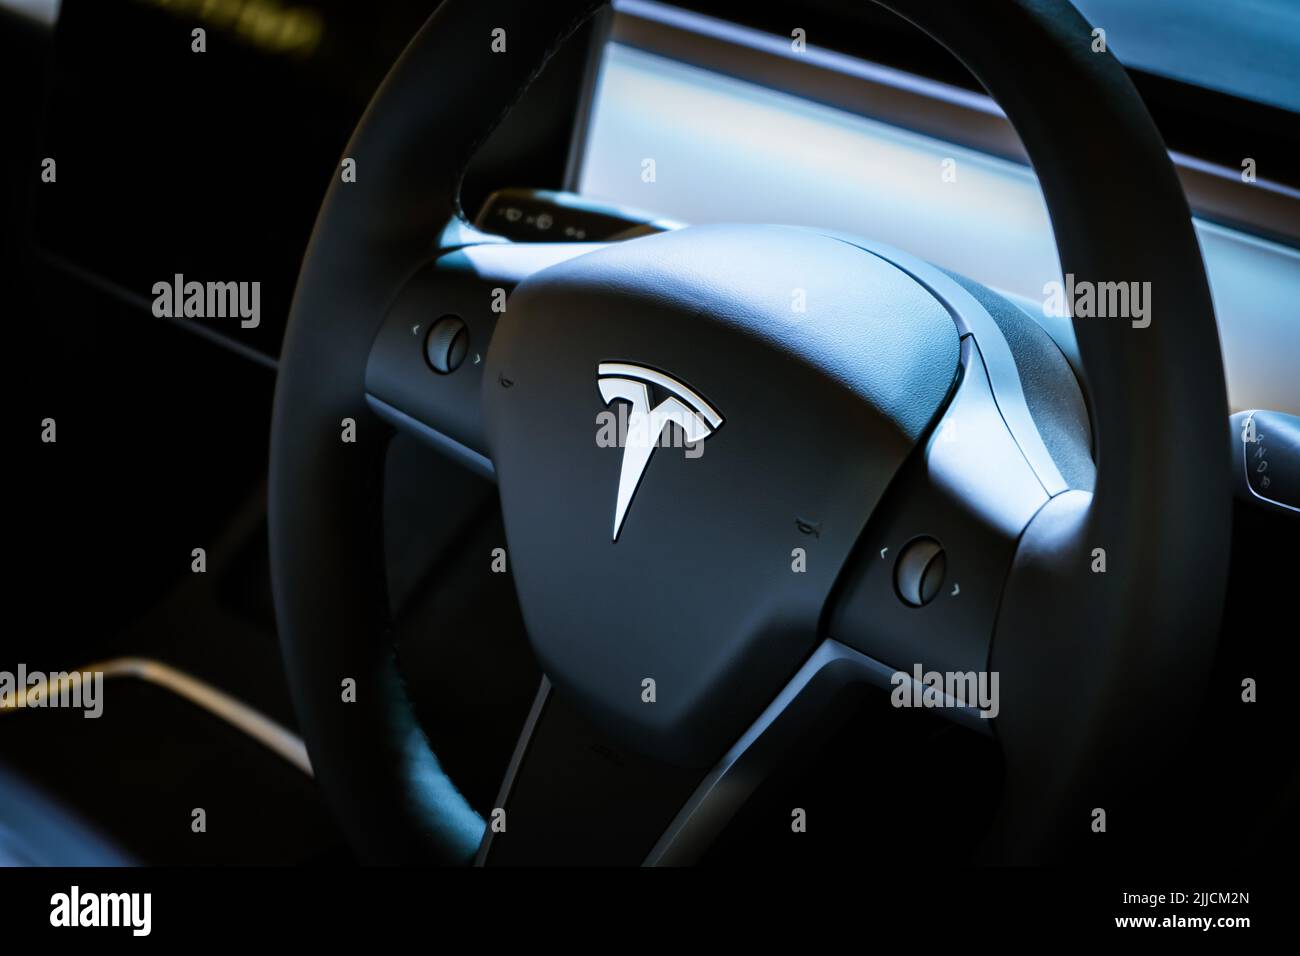 Singapore - July 19, 2022: Tesla logo on a steering wheel. Stock Photo